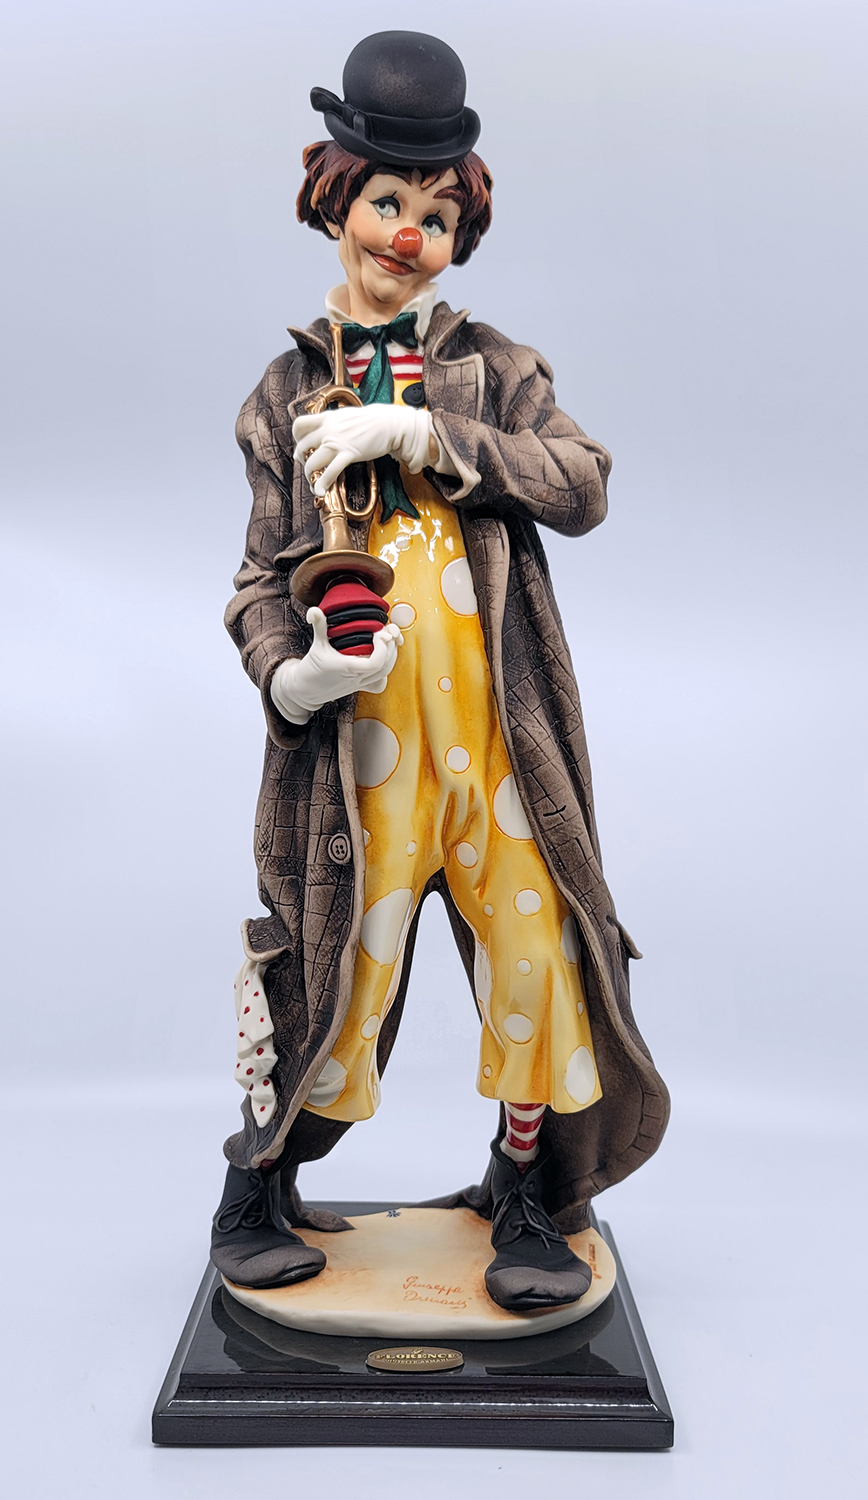 Giuseppe Armani The Musical Clown 0401E Limited Edition Sculpture.